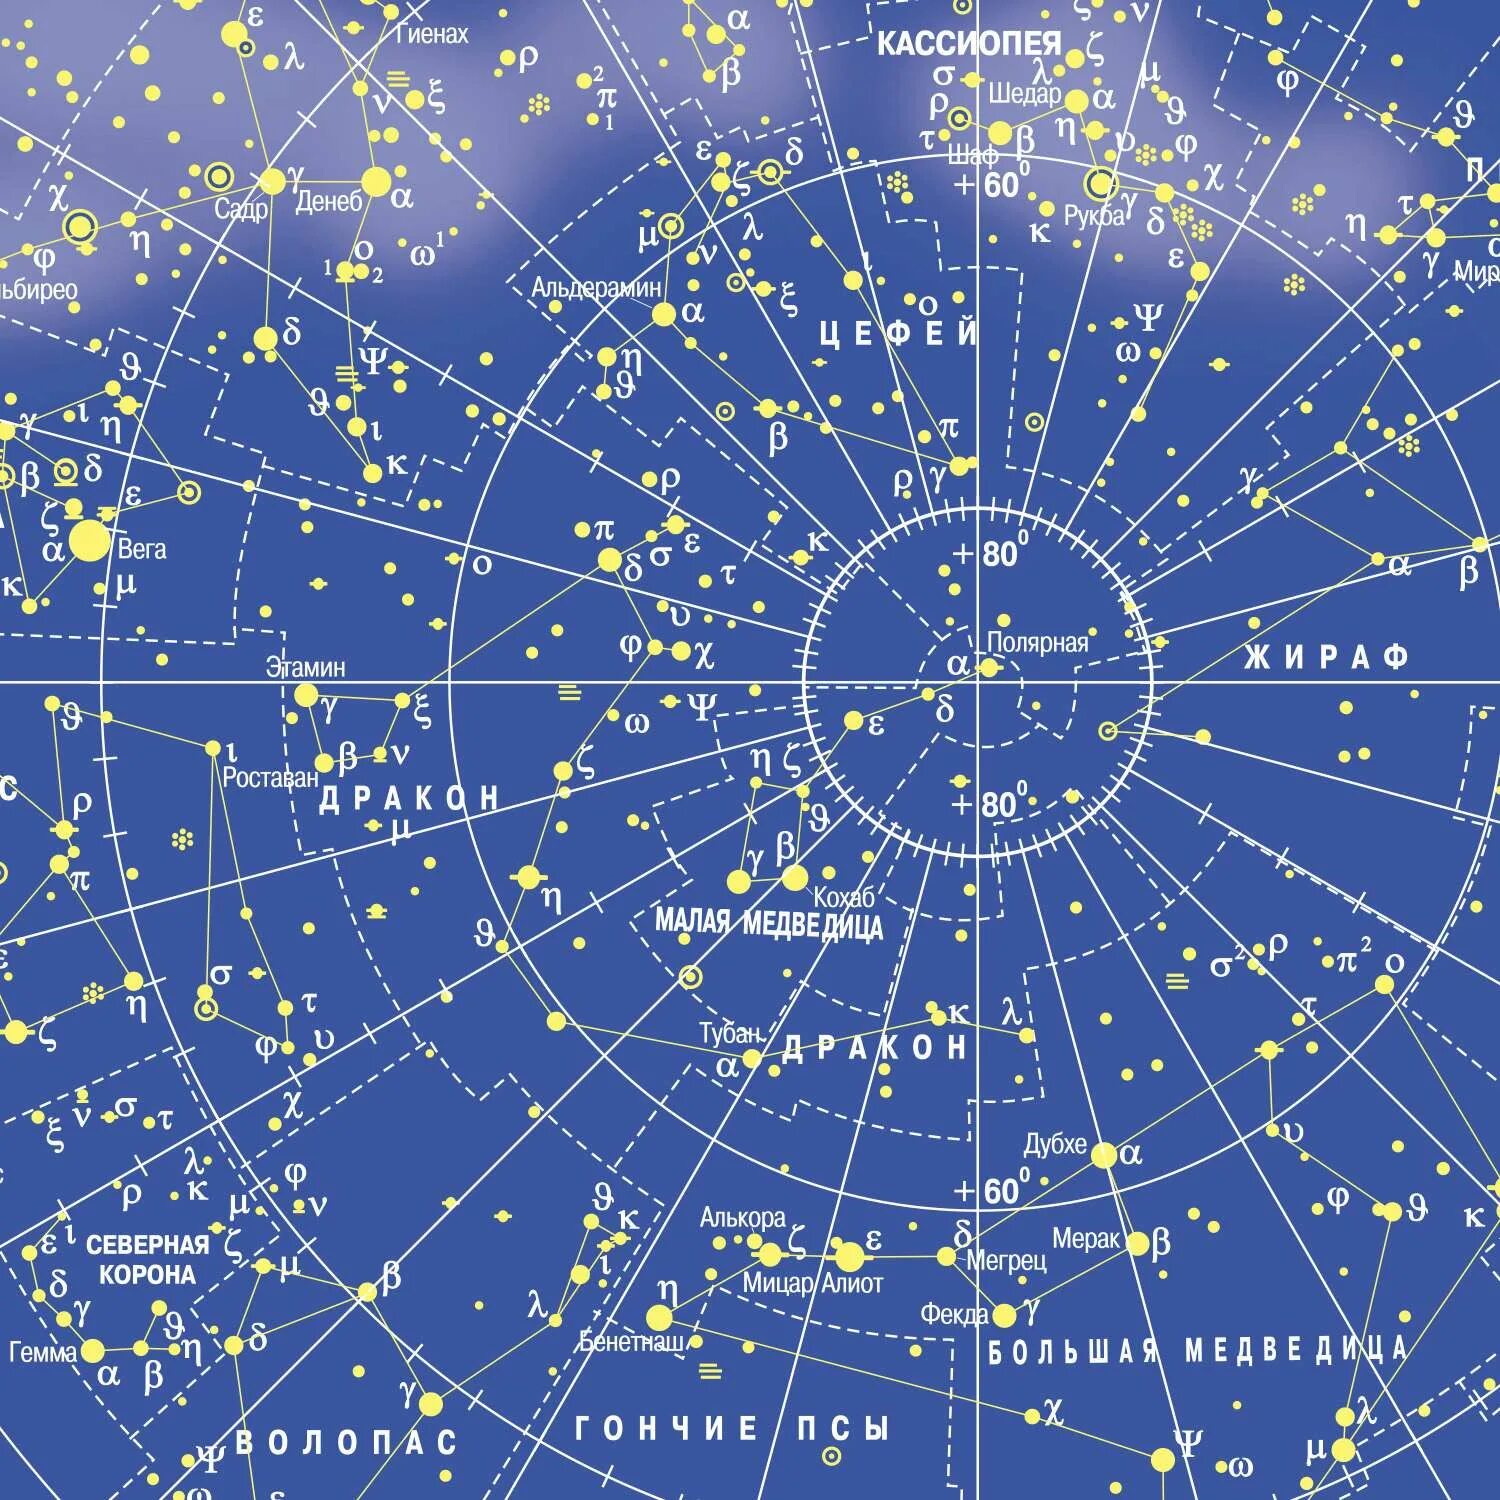 Карта звездного неба. Карта созвездий звездного неба. Звёздная карта неба. Звёздная карта звёздного неба.